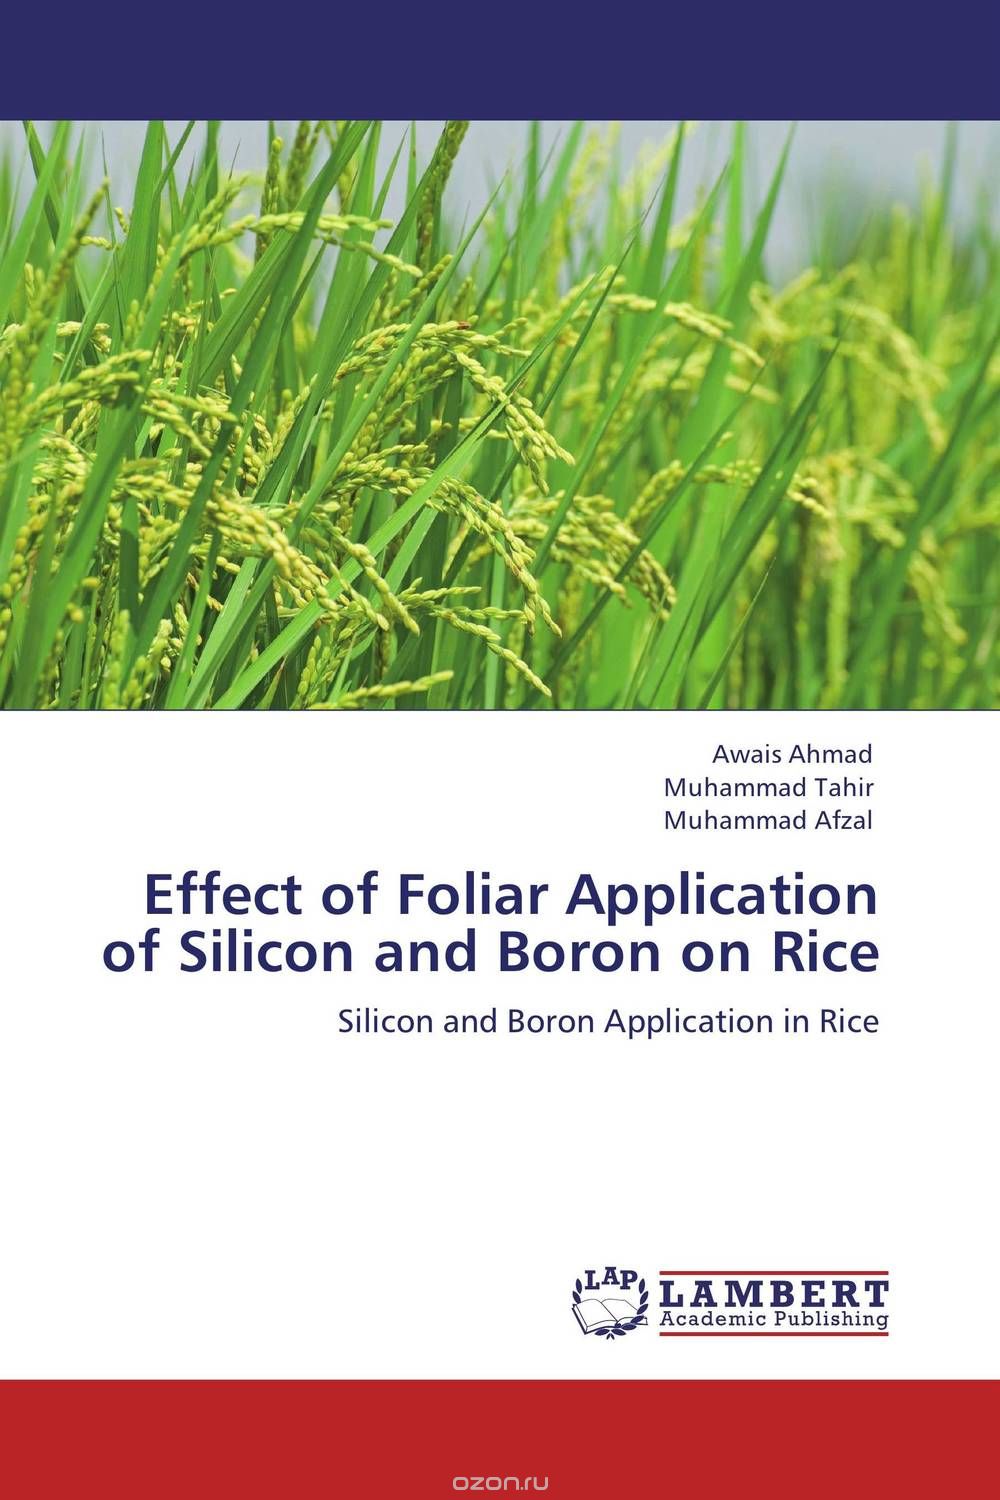 Скачать книгу "Effect of Foliar Application of Silicon and Boron on Rice"